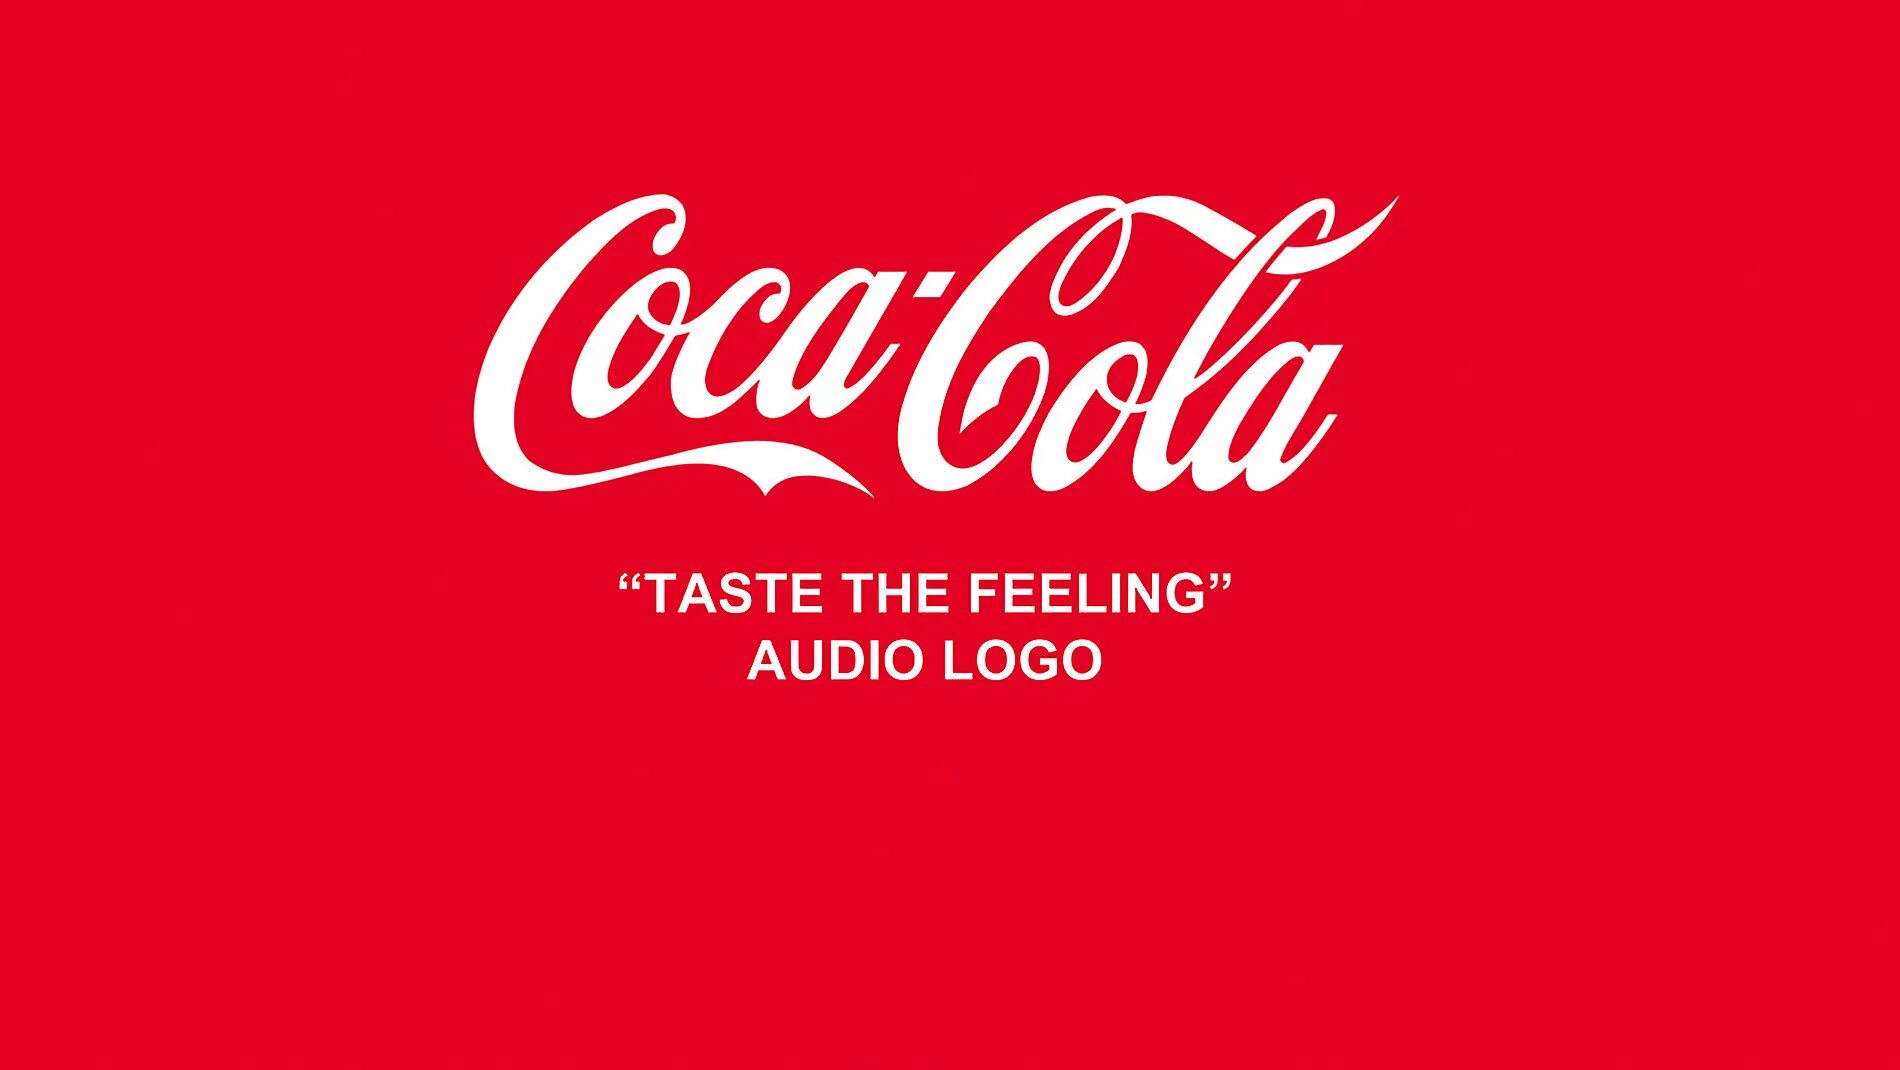 Кока кола лейбл. Coca Cola на Красном фоне. Этикетка Кока колы. Надпись Кока кола на Красном фоне. Taste the feeling